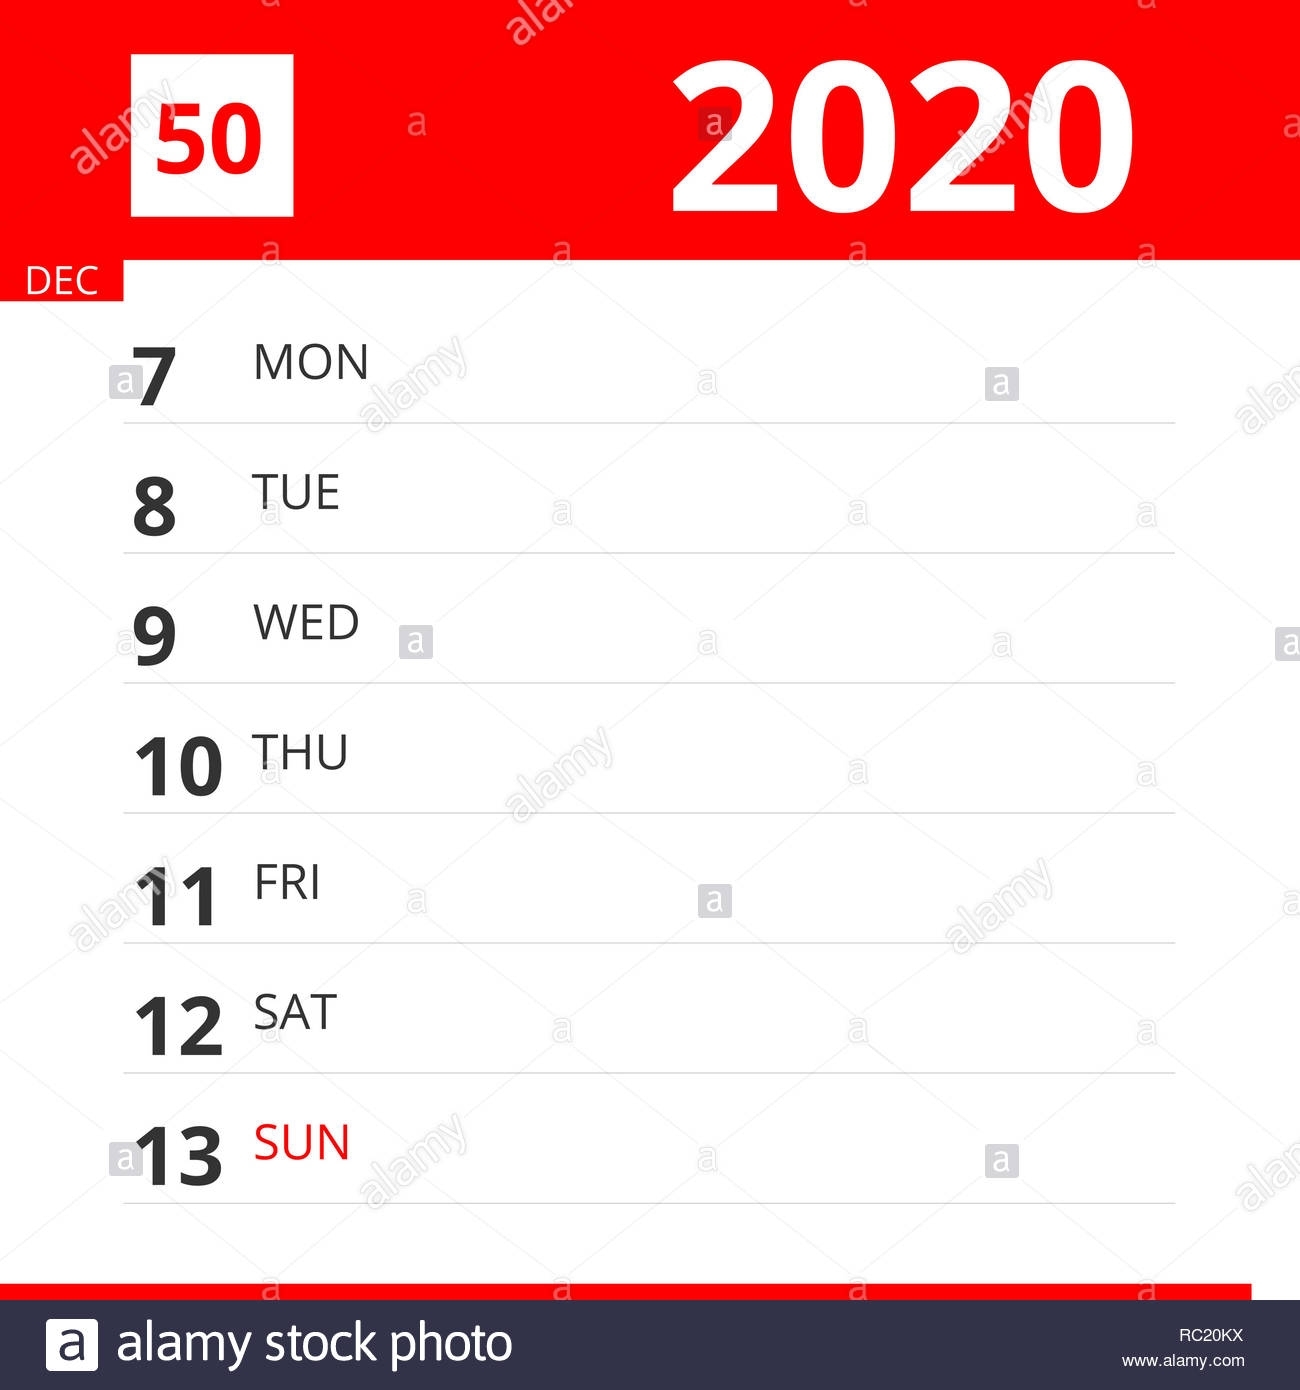 Calendar Planner For Week 50 In 2020, Ends December 13, 2020